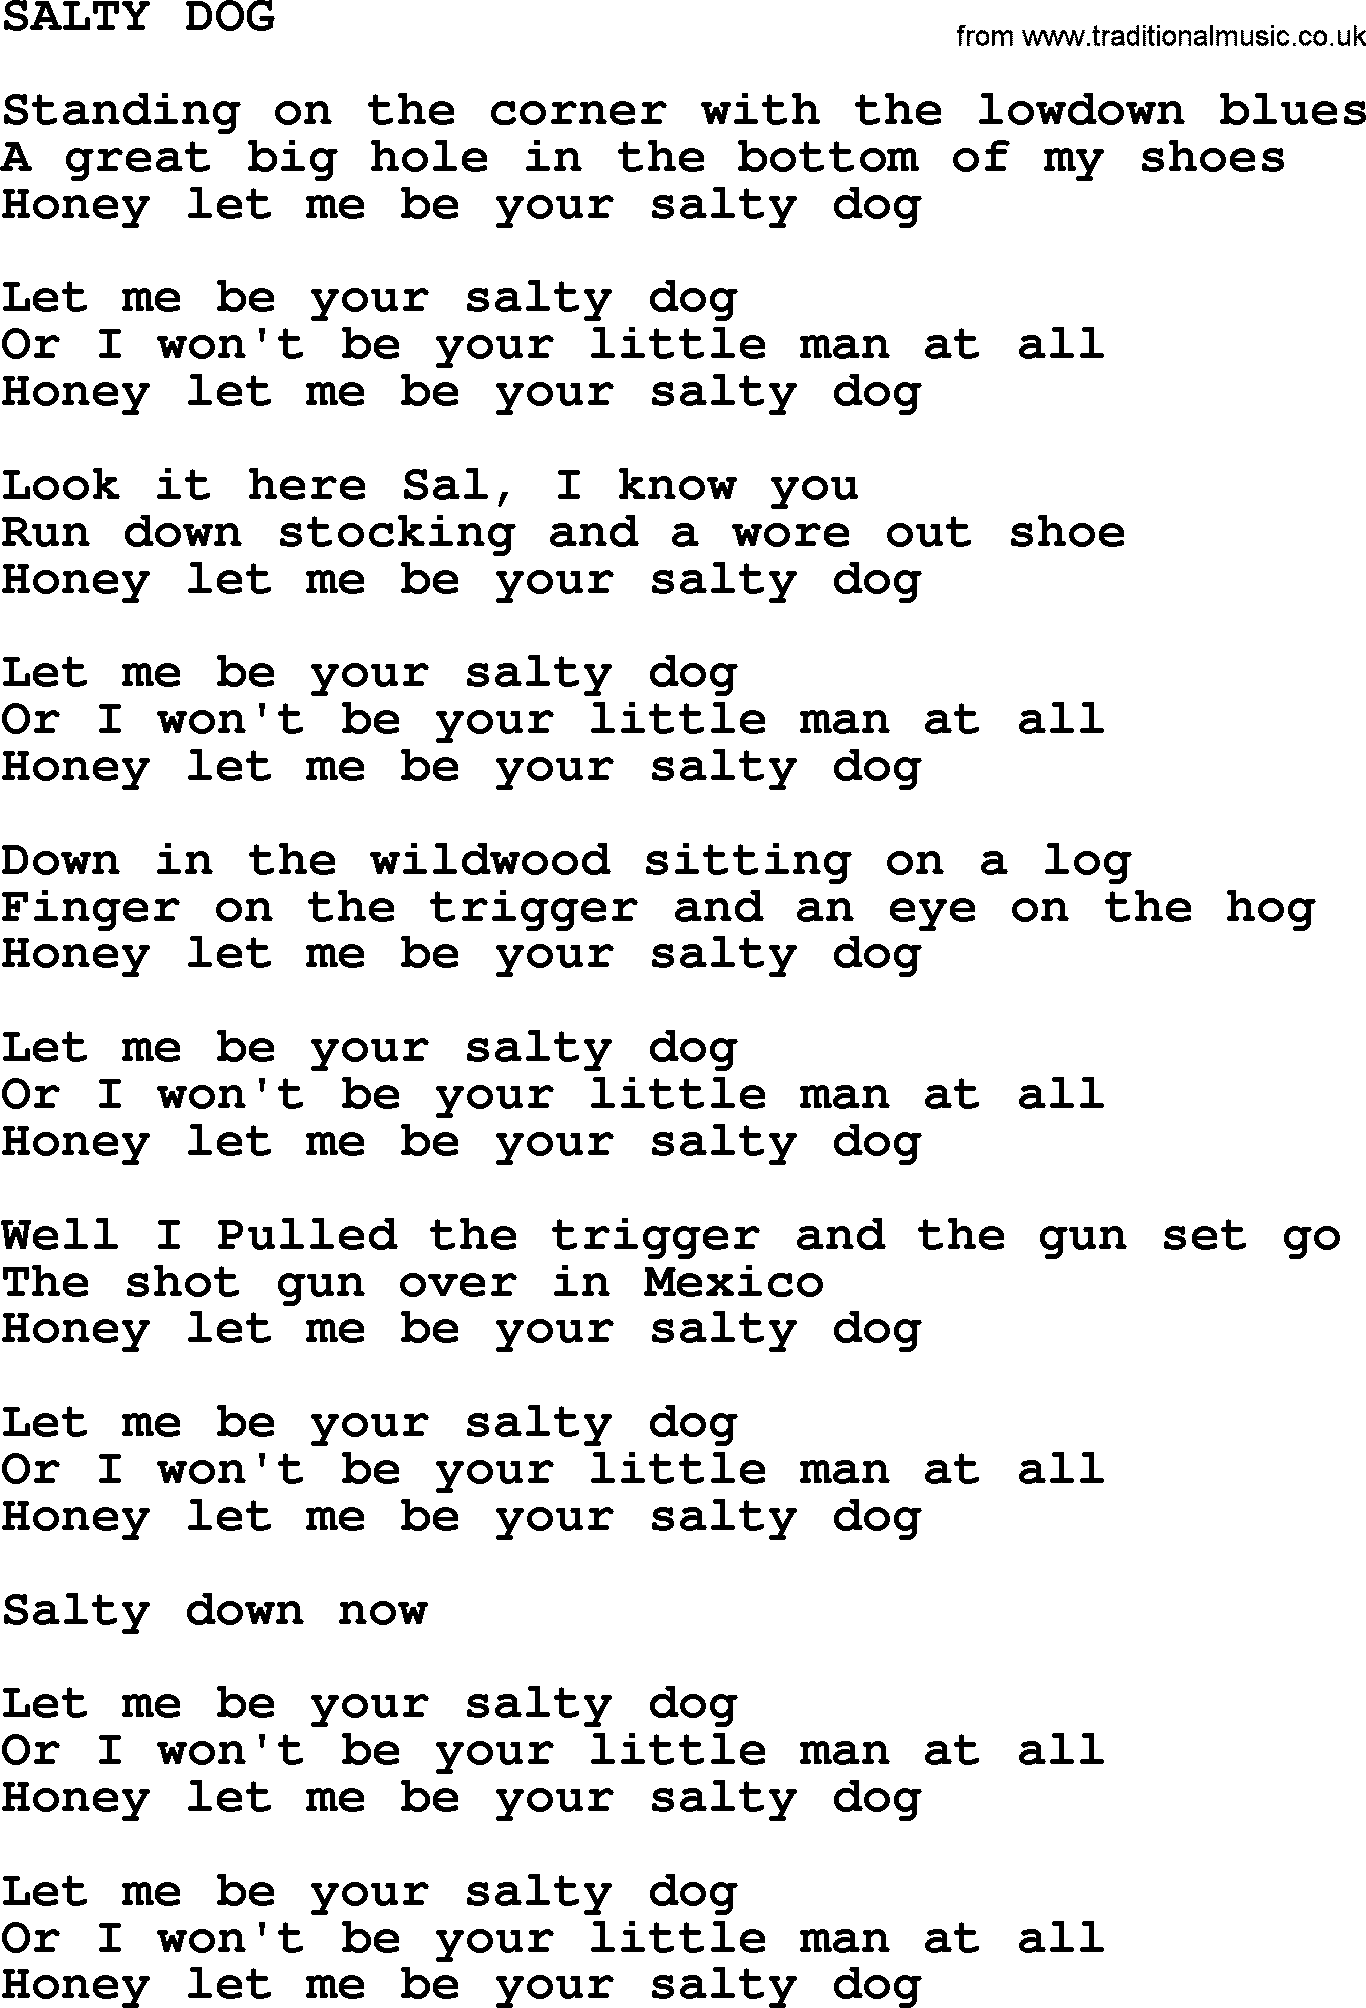 Johnny Cash song Salty Dog.txt lyrics